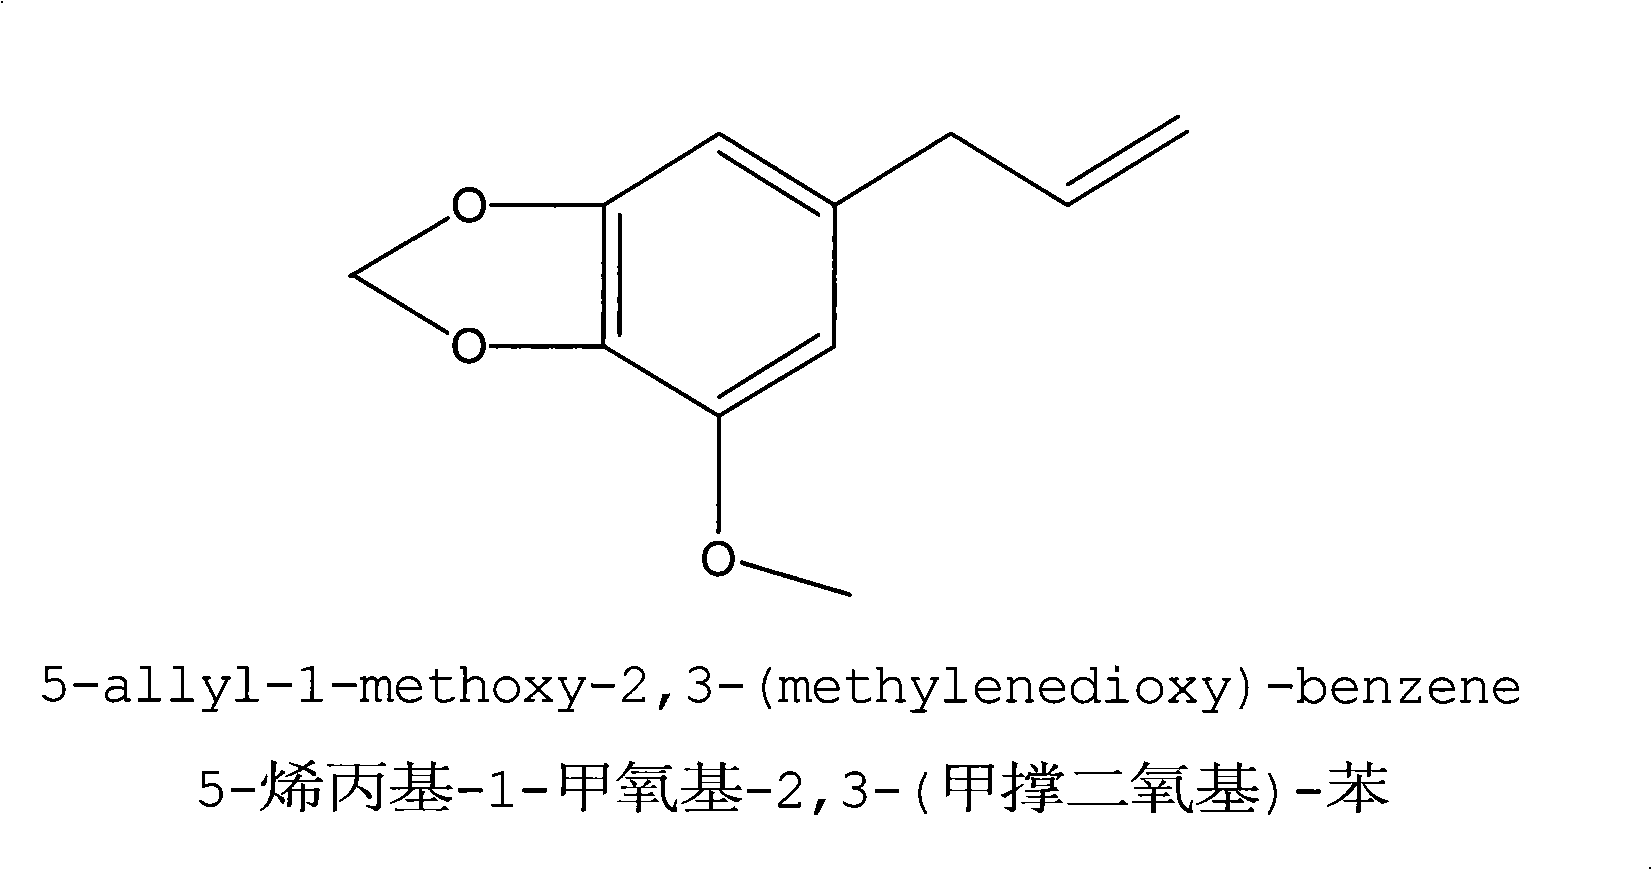 Method for preparing myristicin from sinkiang Ligusticum sinense